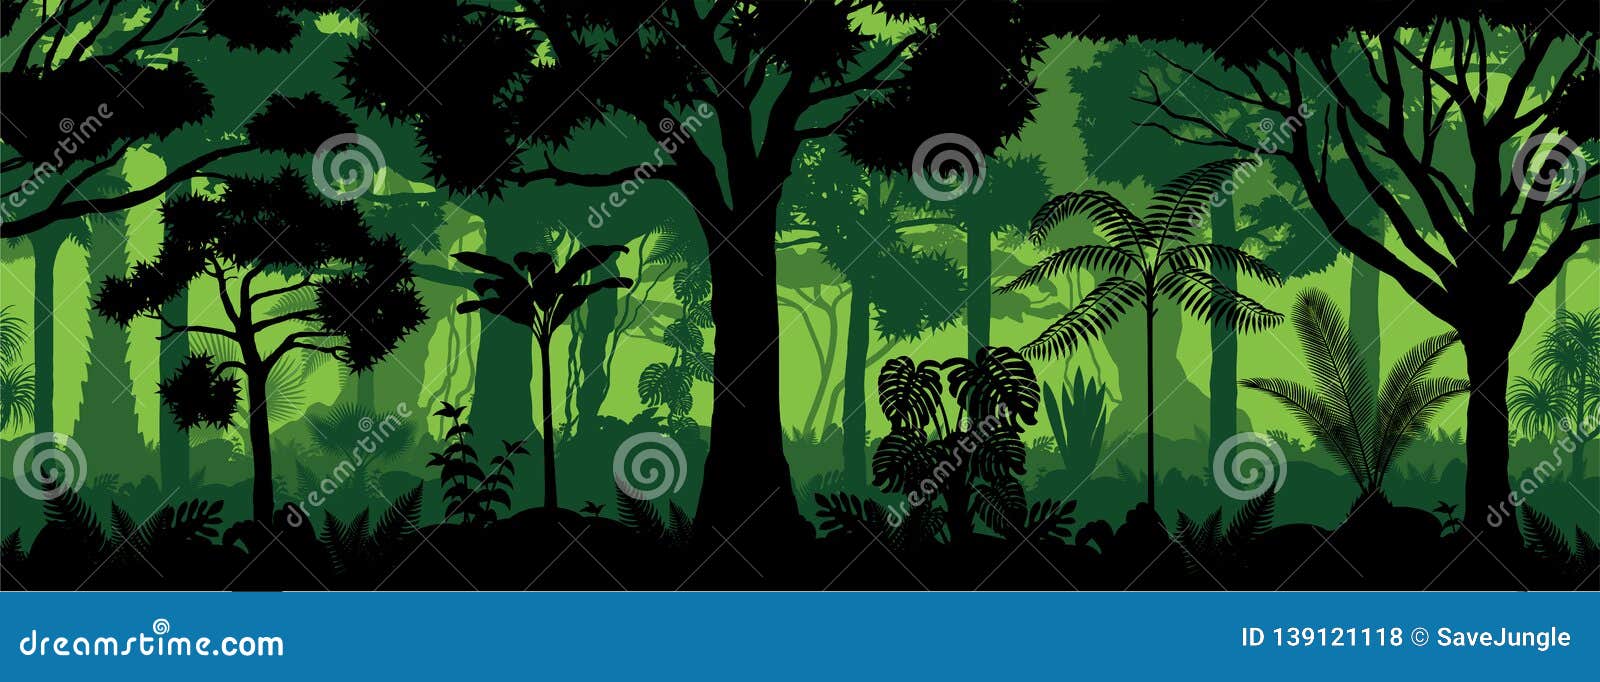  brazil jungle horizontal seamless tropical rainforest jungle forest background